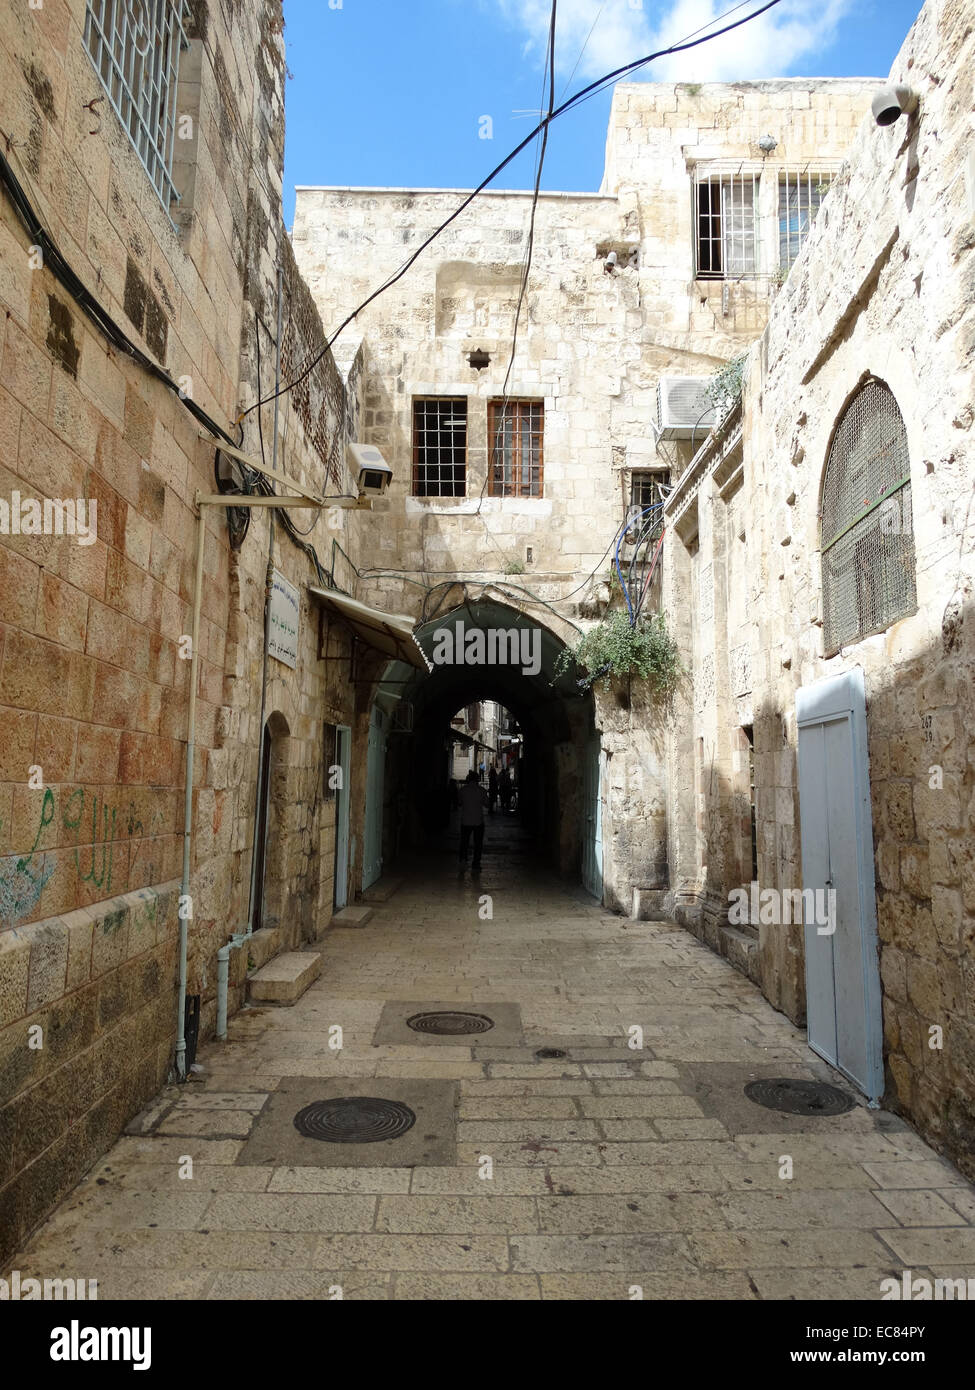 Passaggio stretto in Gerusalemme Est Araba; Israele. Foto Stock